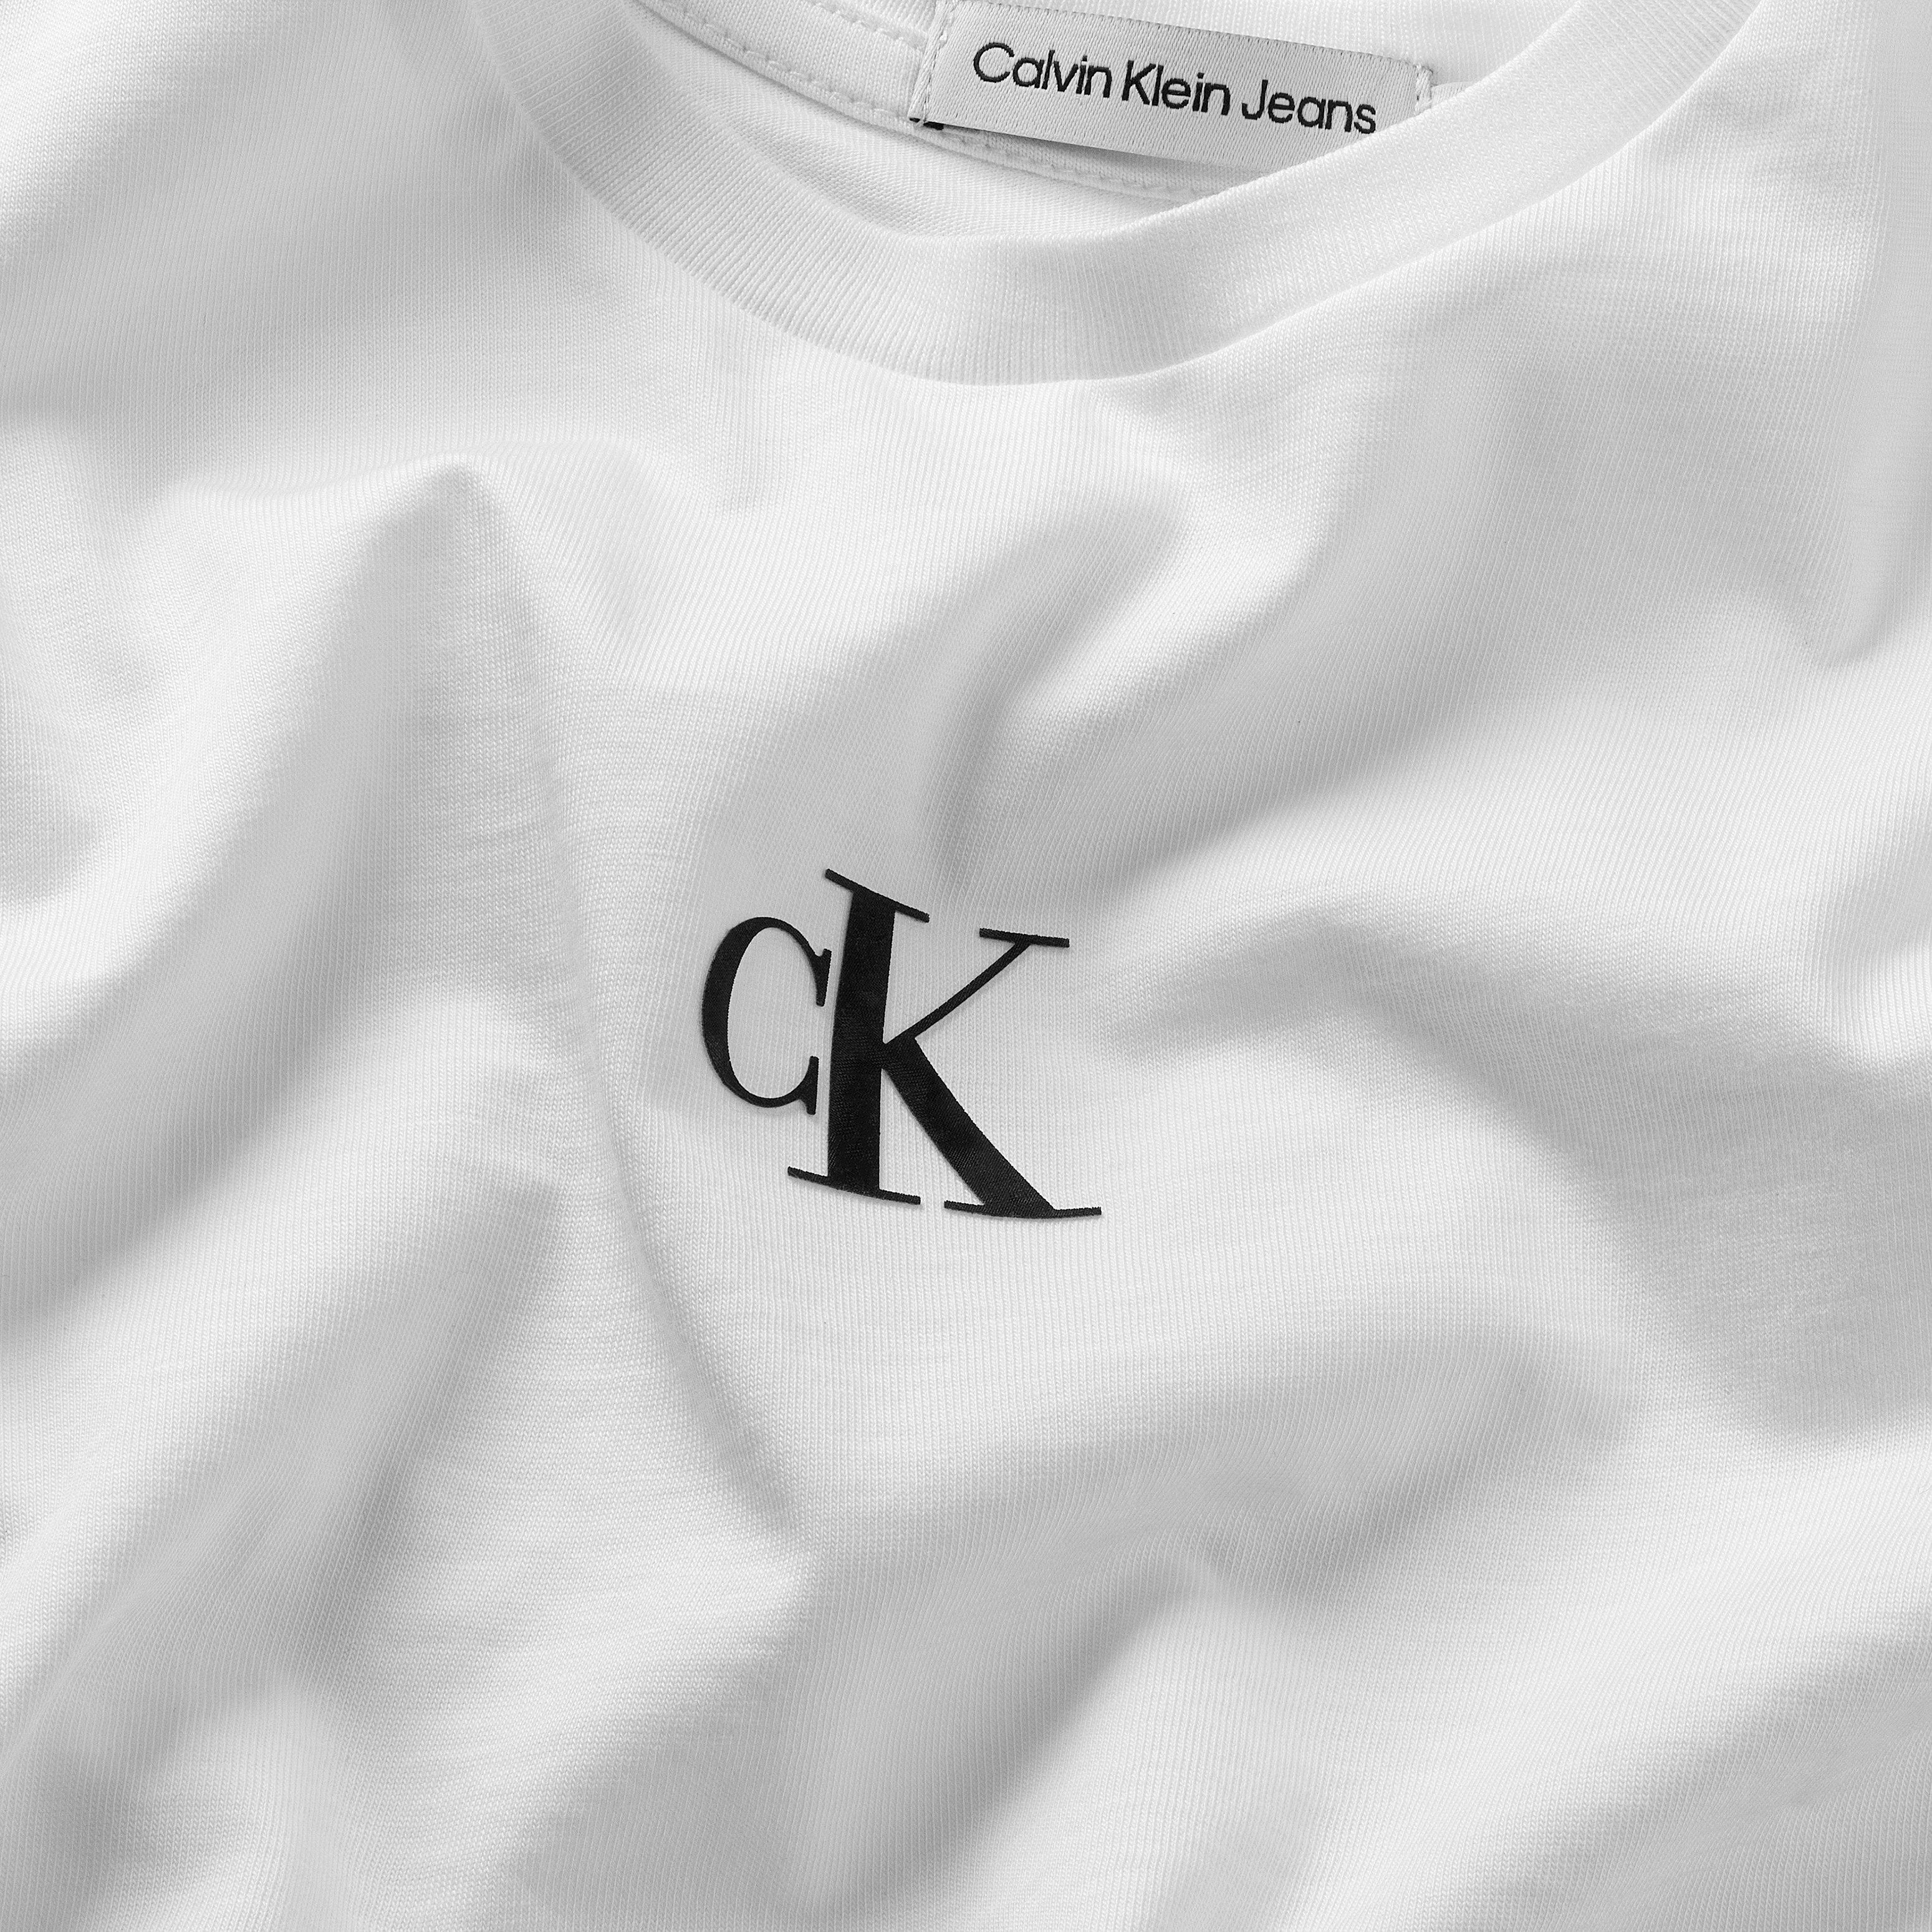 CK Klein LOGO White Bright LS Langarmshirt Jeans Calvin T-SHIRT